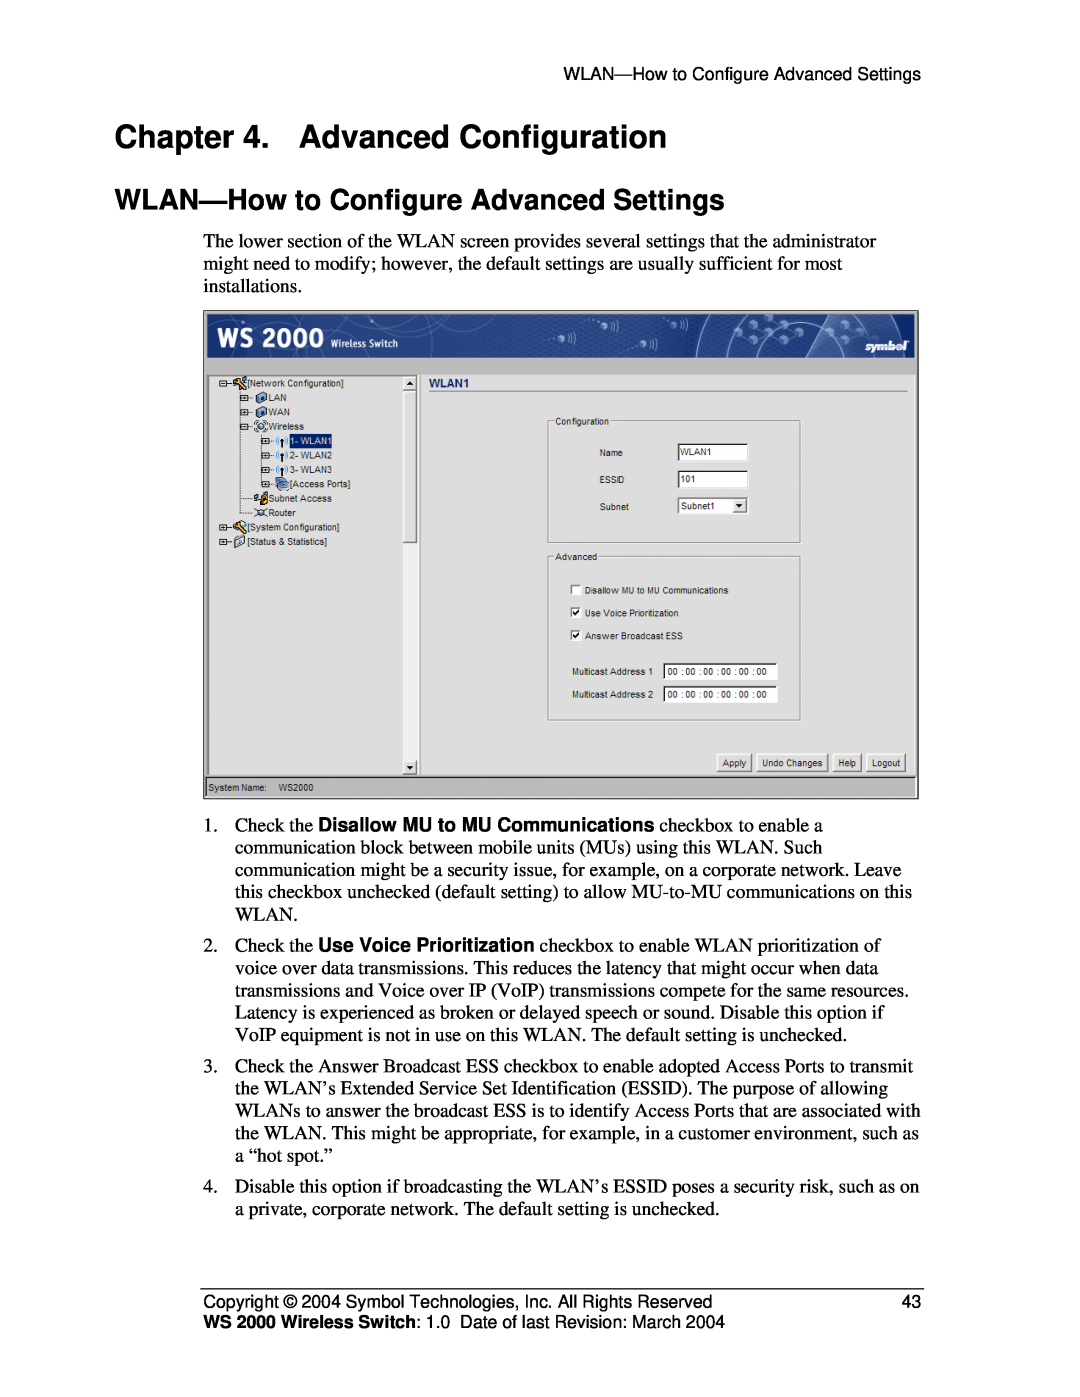 Symbol Technologies WS 2000 manual Advanced Configuration, WLAN-How to Configure Advanced Settings 